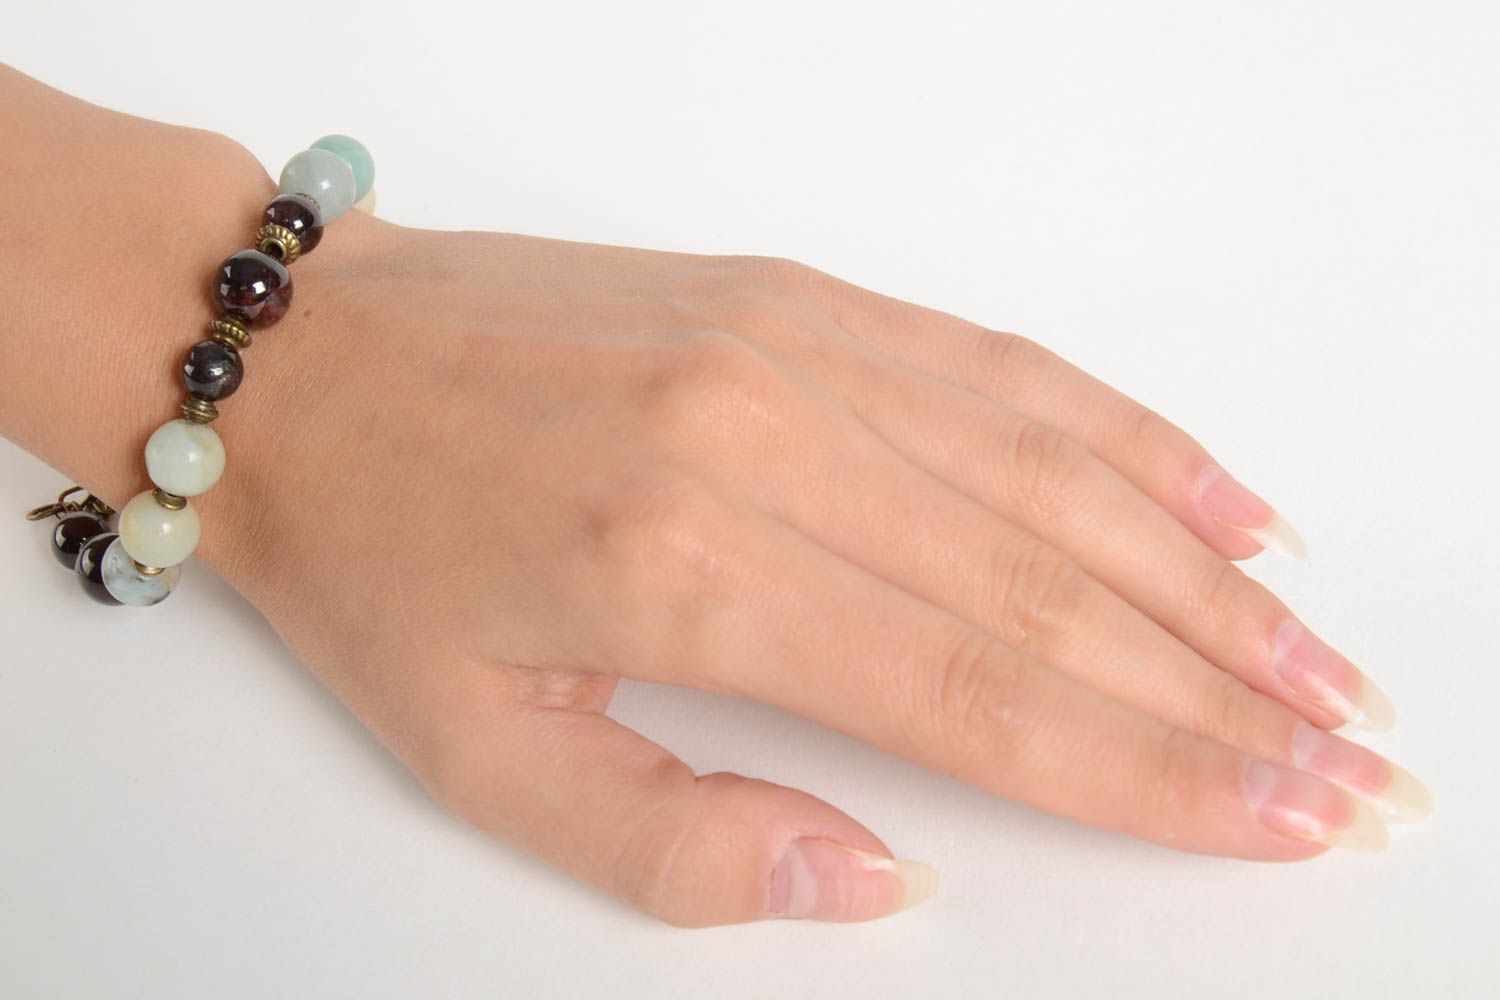 Unusual handmade gemstone bracelet wrist bracelet with natural stones gift ideas photo 2